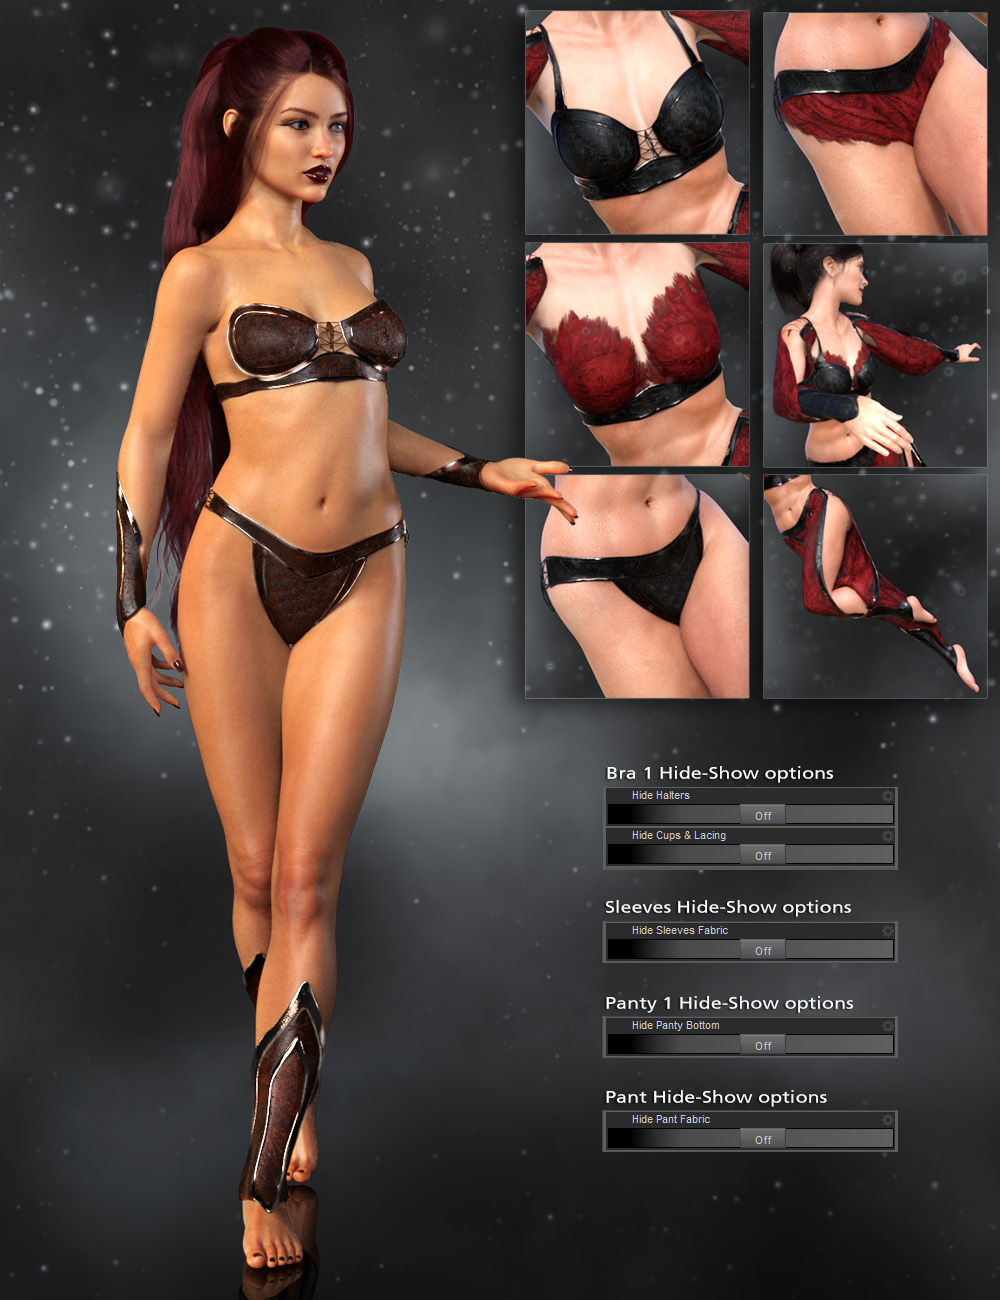 dForce Suriya Outfit for Genesis 8 Female by: ArkiShox-Design, 3D Models by Daz 3D